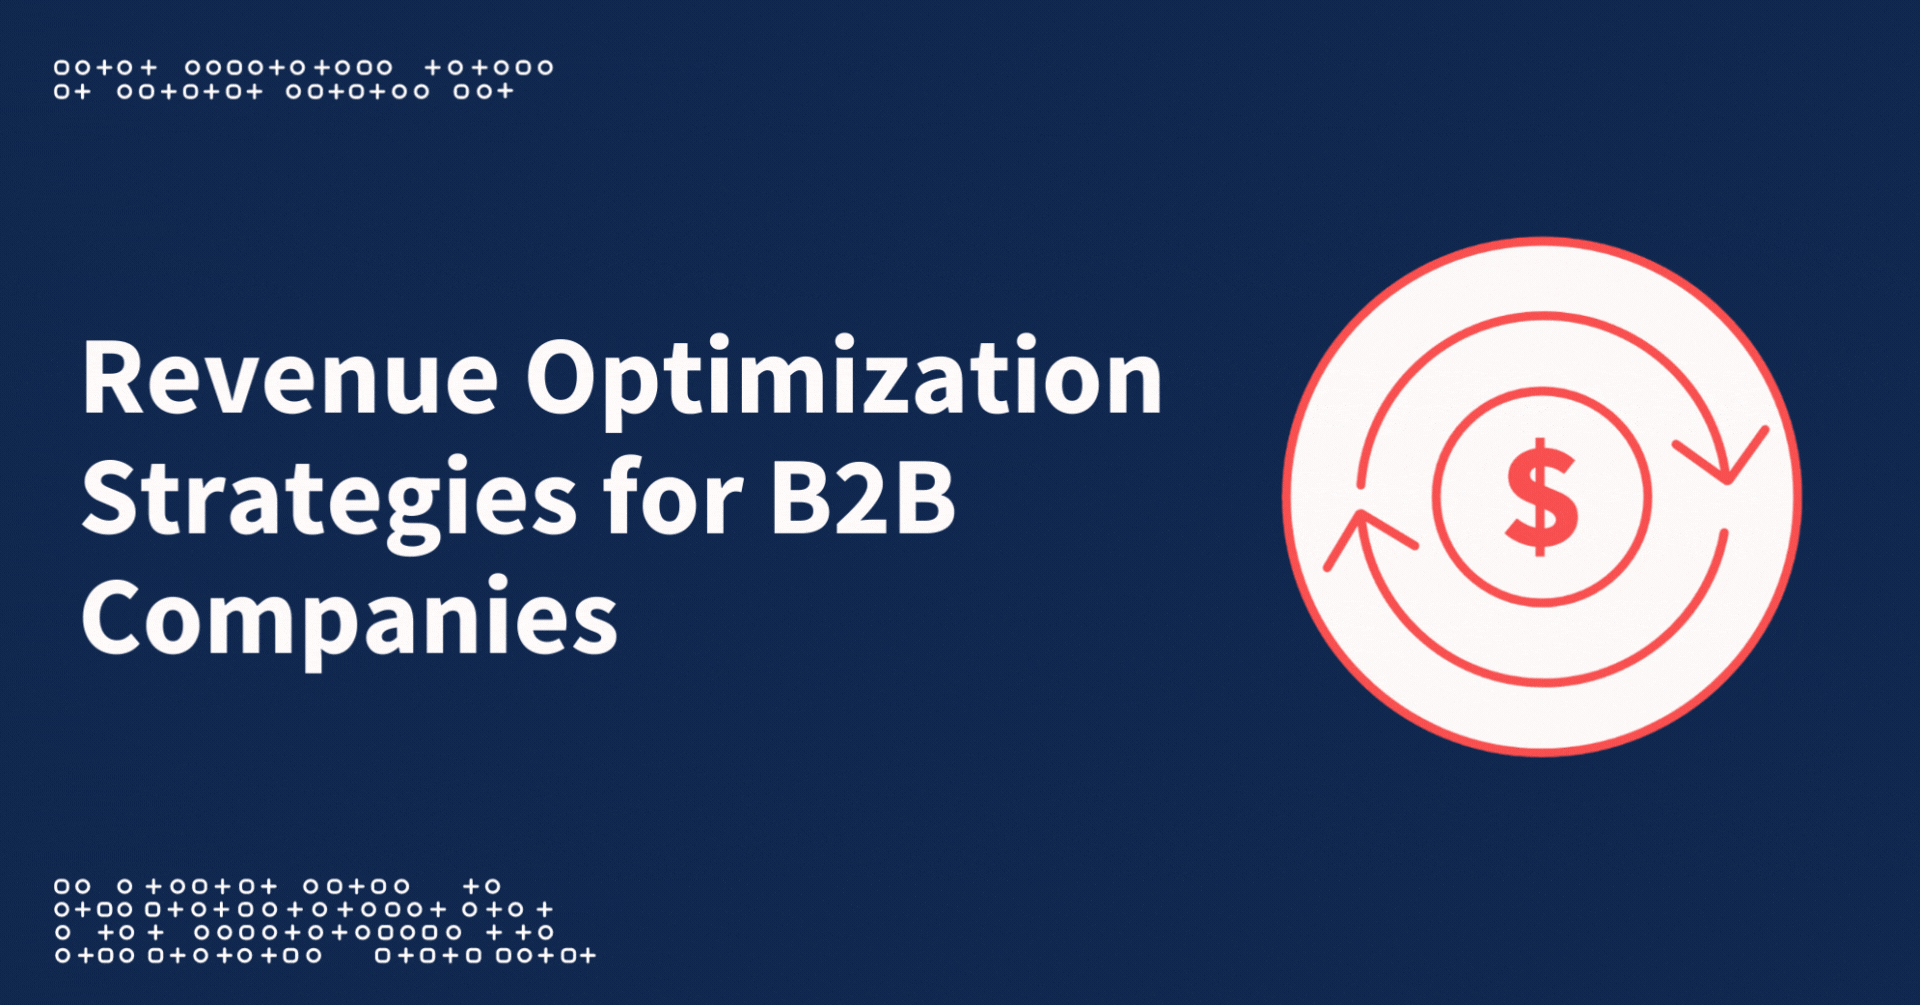 Revenue Optimization Strategies for B2B Companies